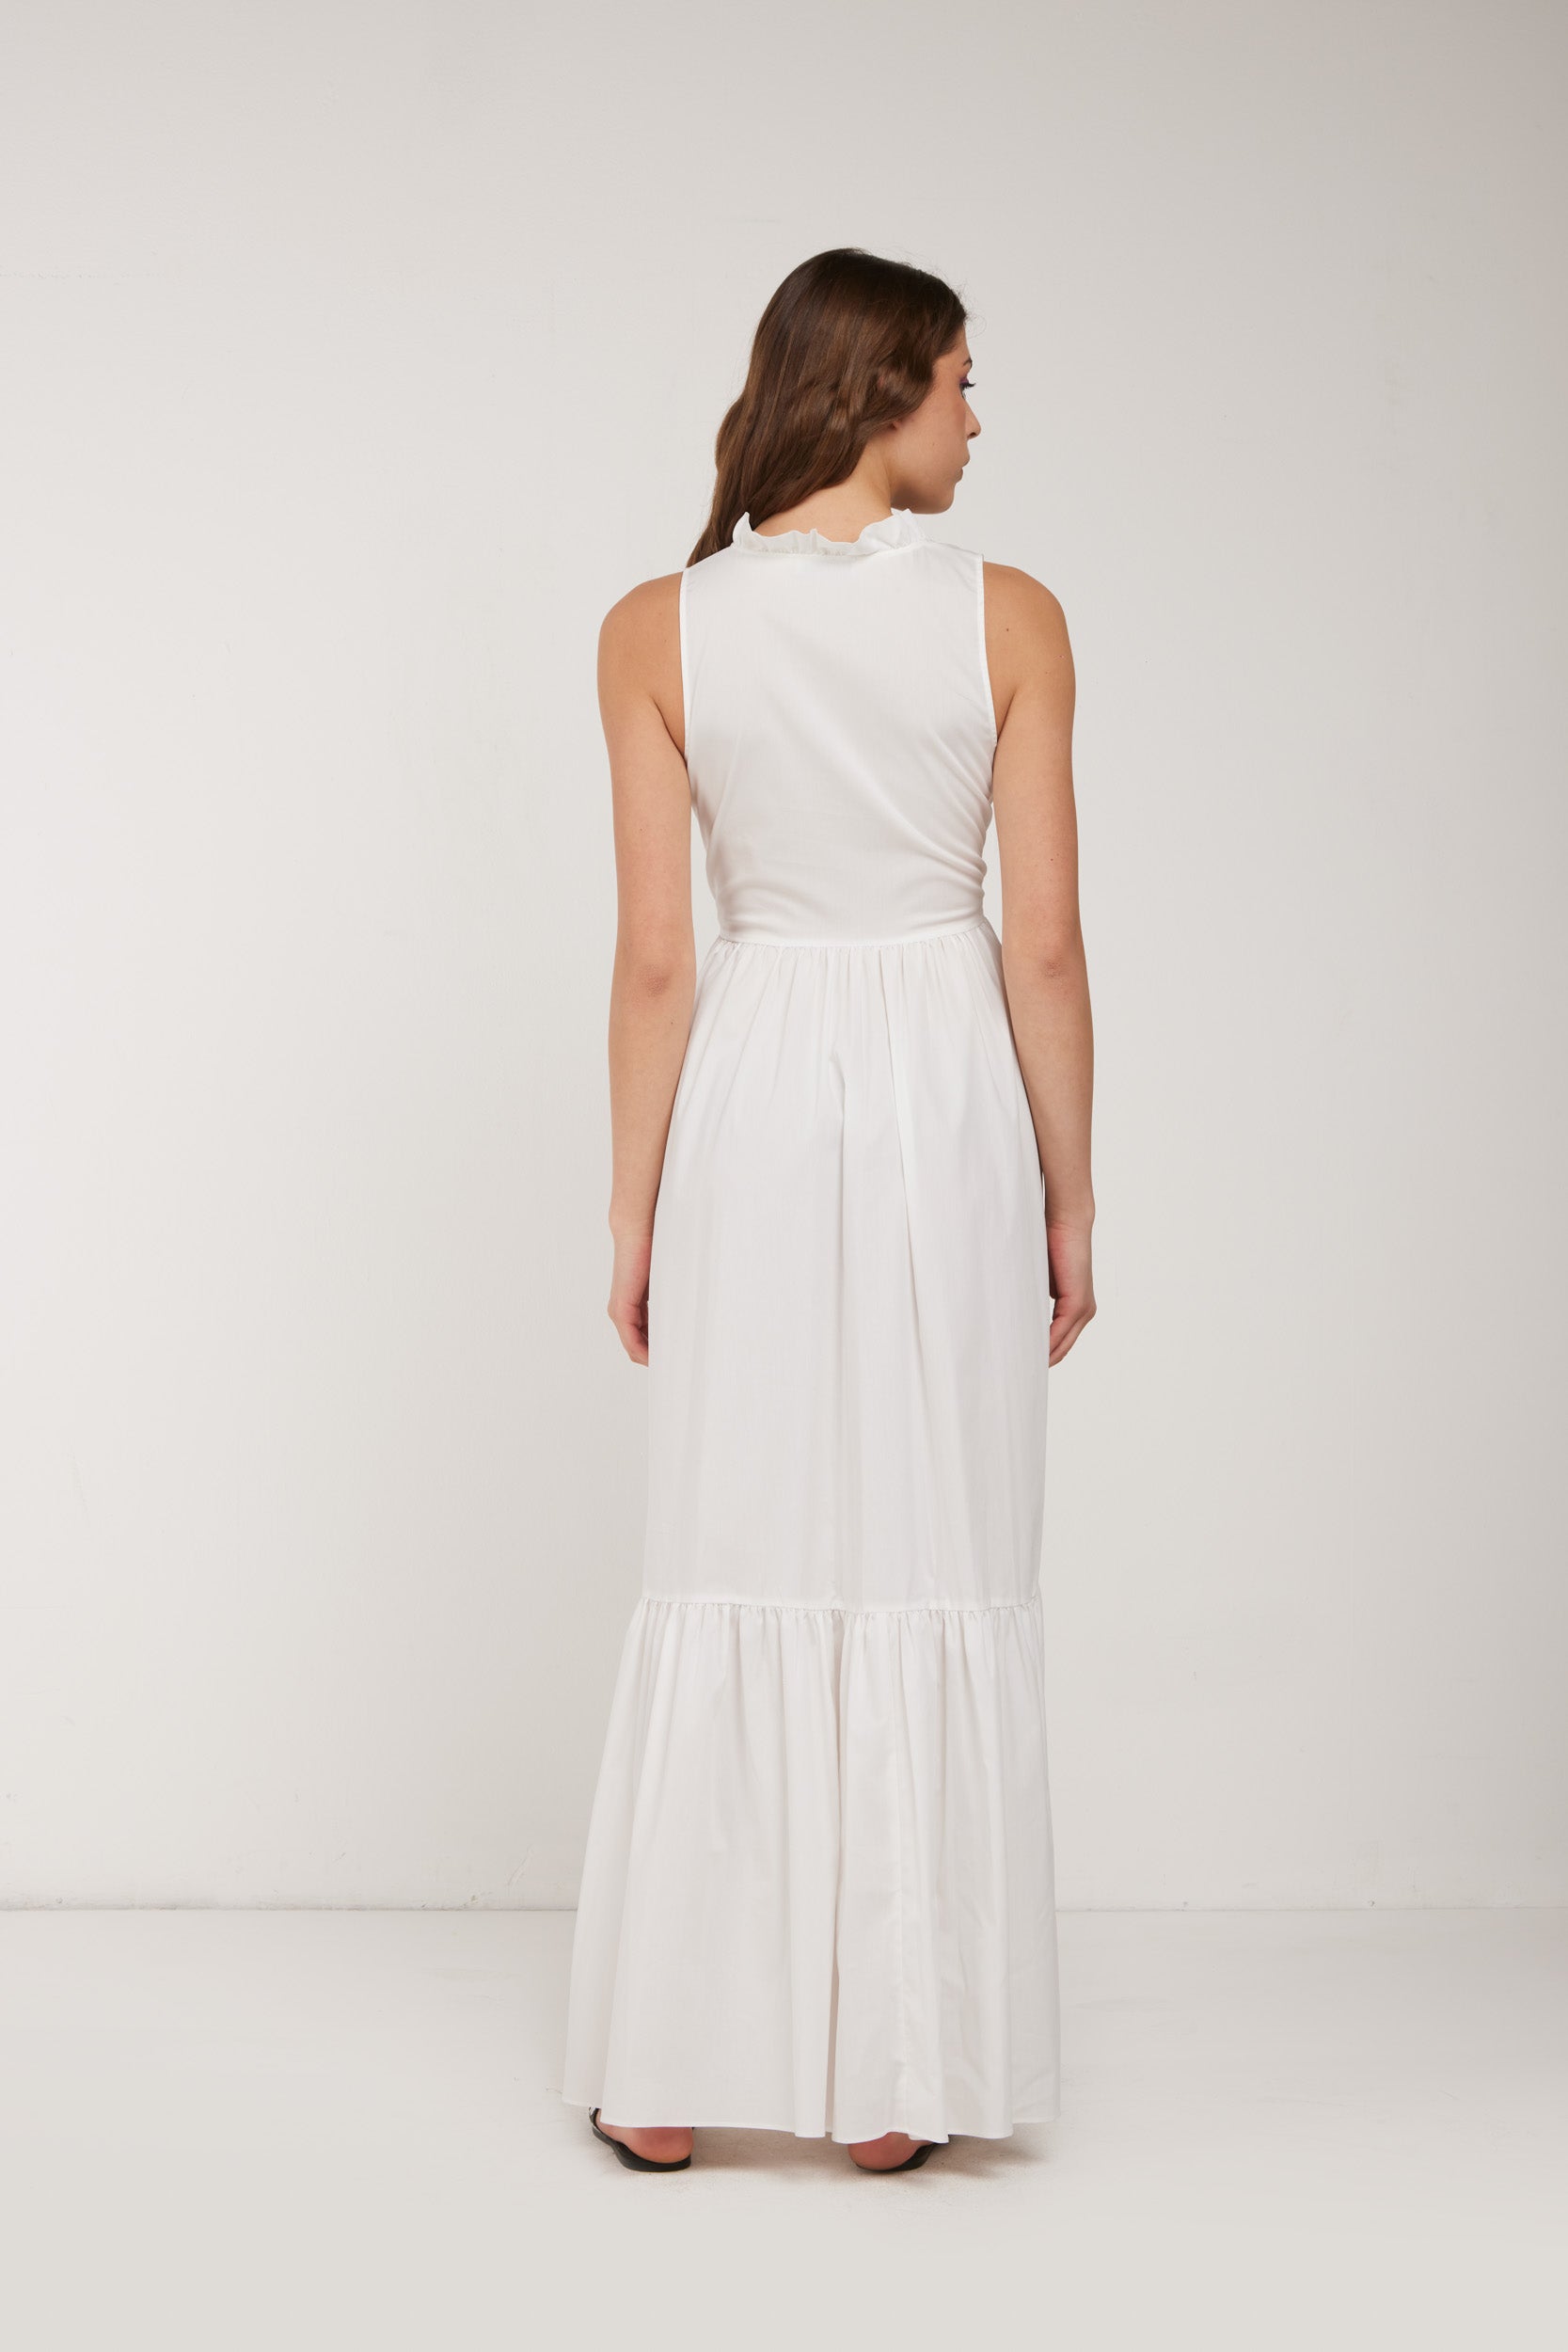 TWINSET Long White Dress